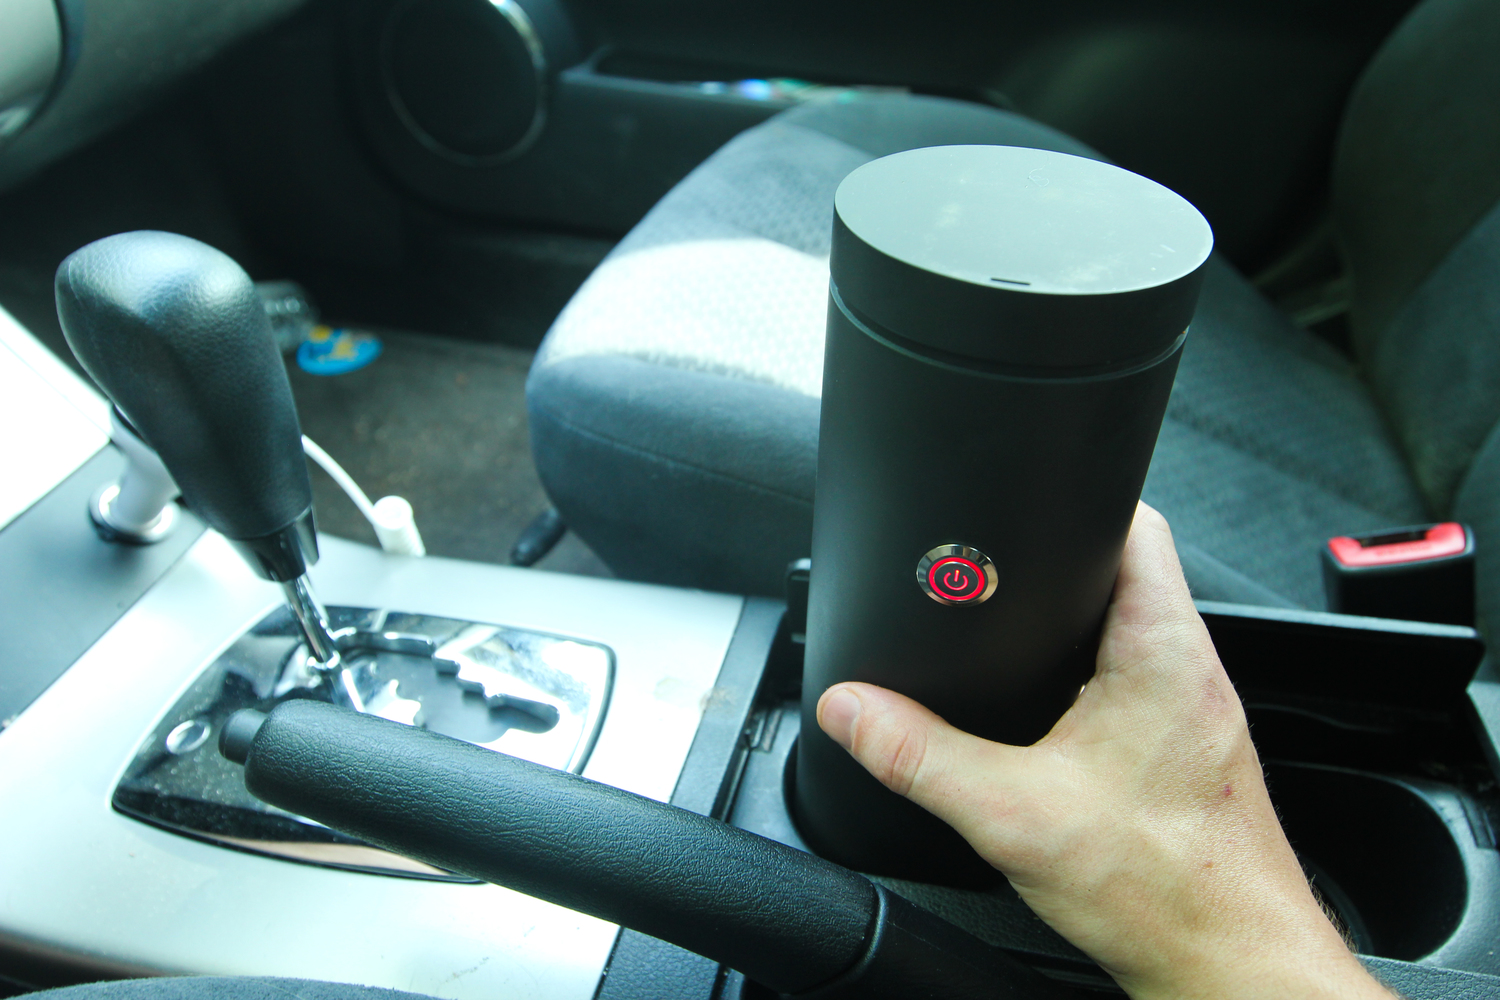 PHOTO: Hey Joe Coffee Mug lets you brew coffee inside the mug at the perfect temperature.